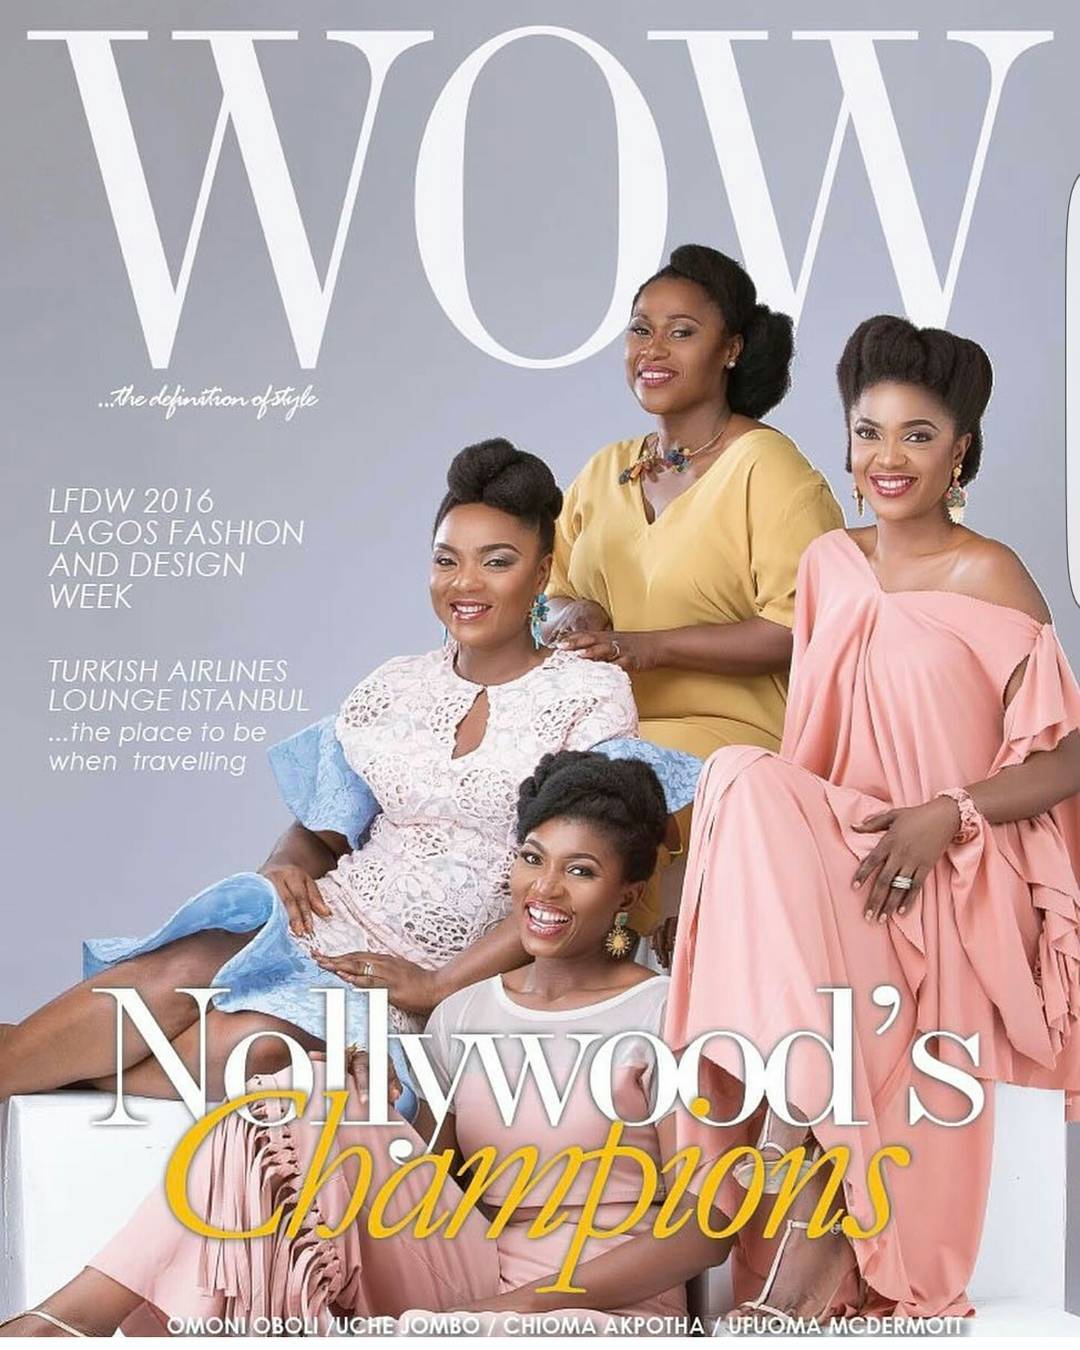 Gorgeous Nollywood’s Champions Chioma Akpotha, Uche Jombo, Omoni Oboli And Ufuoma Mcdermott Are In Wow Magazine